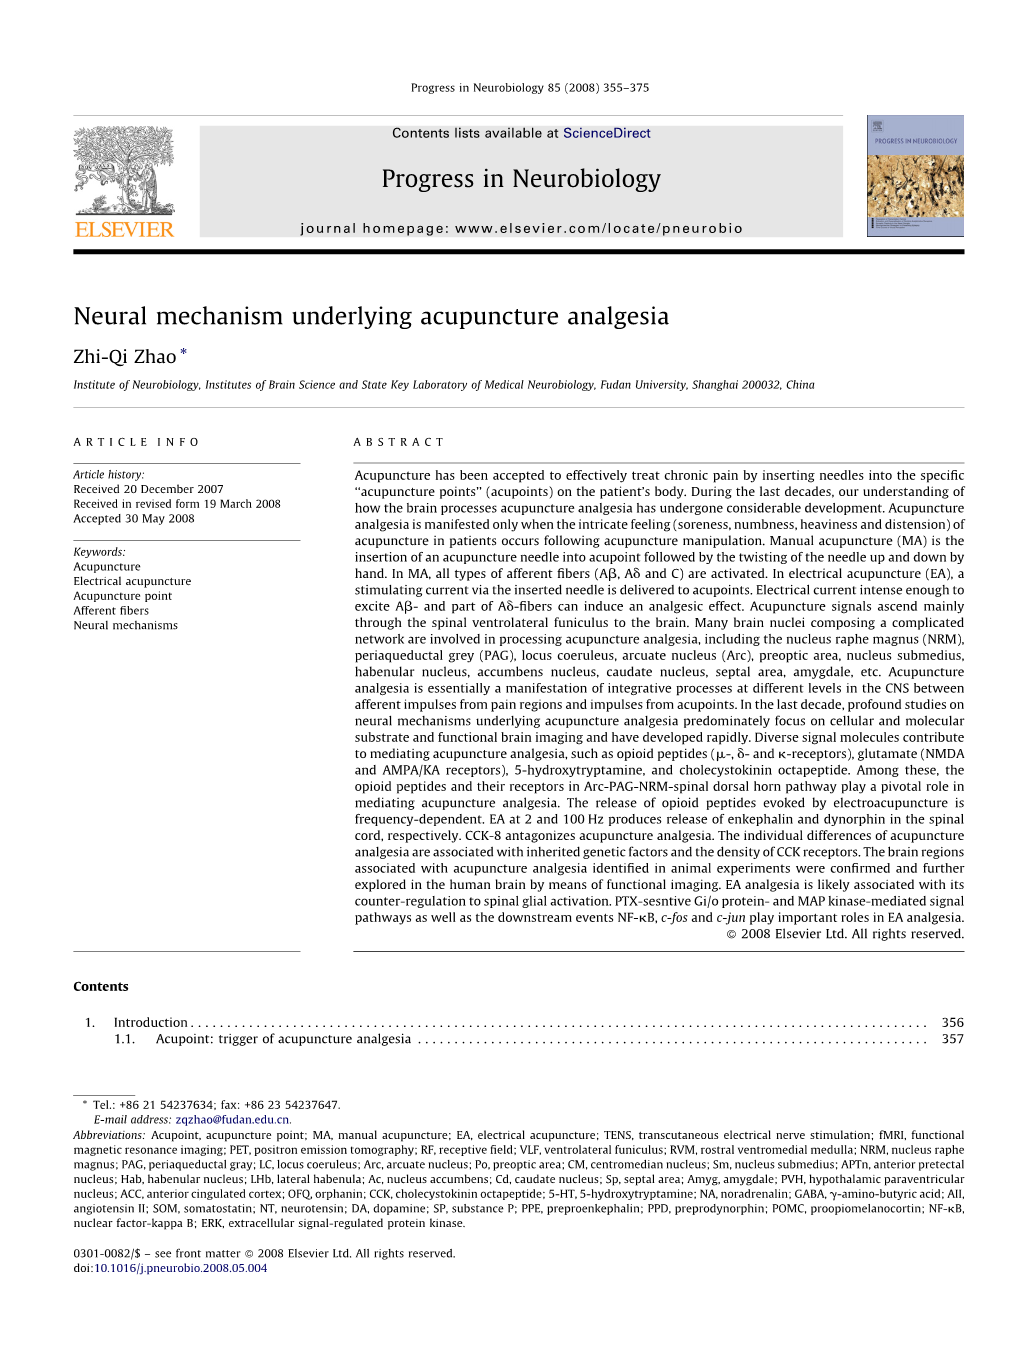 Neural Mechanism Underlying Acupuncture Analgesia Progress in Neurobiology